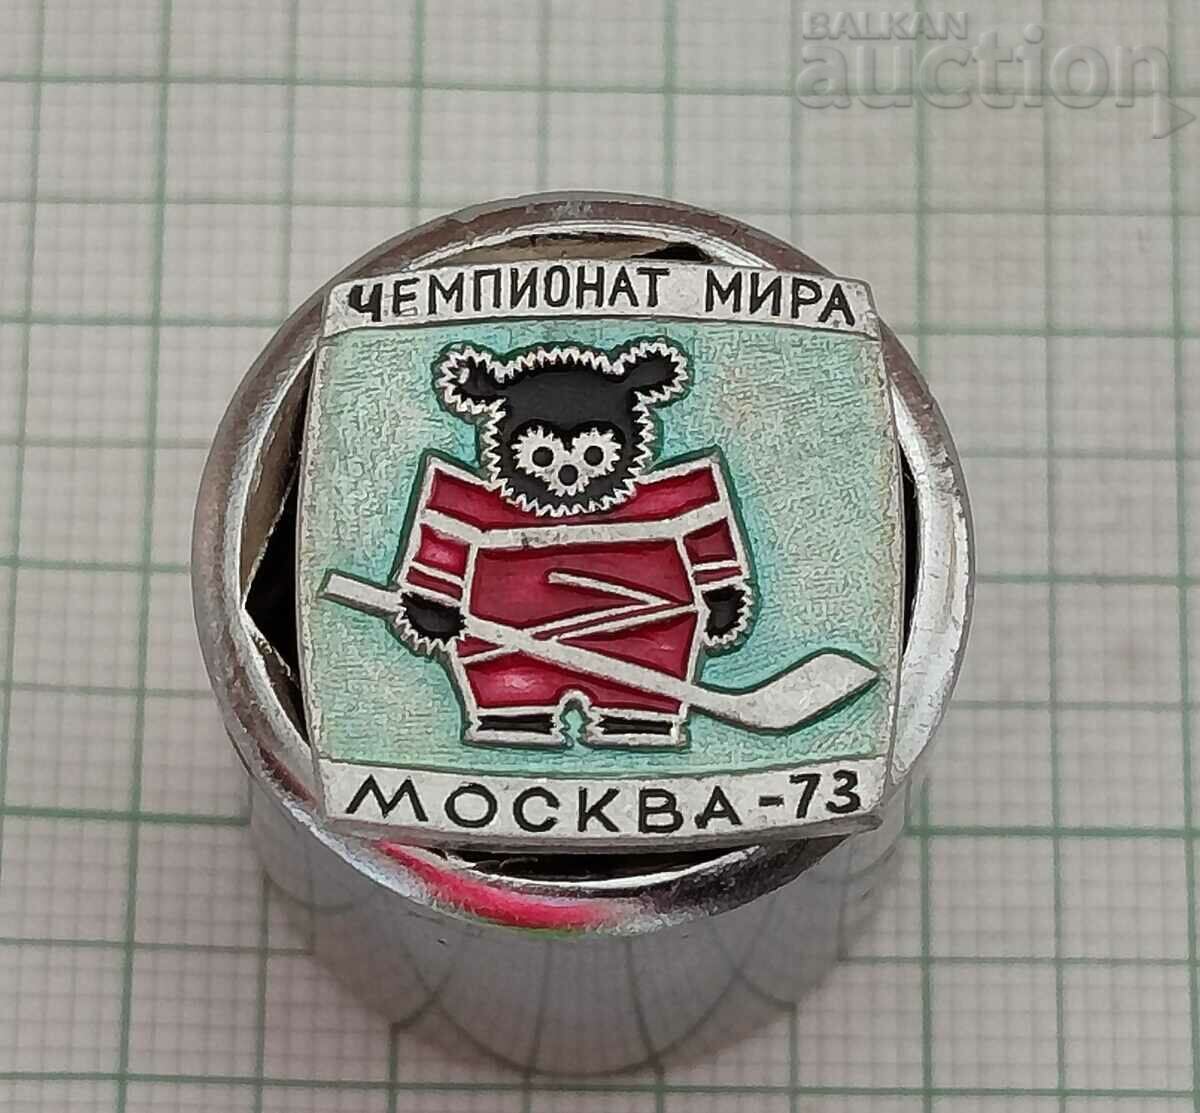 TURNEUL MONDIAL DE HOCHEI MOSCOVA URSS 1973 insignă